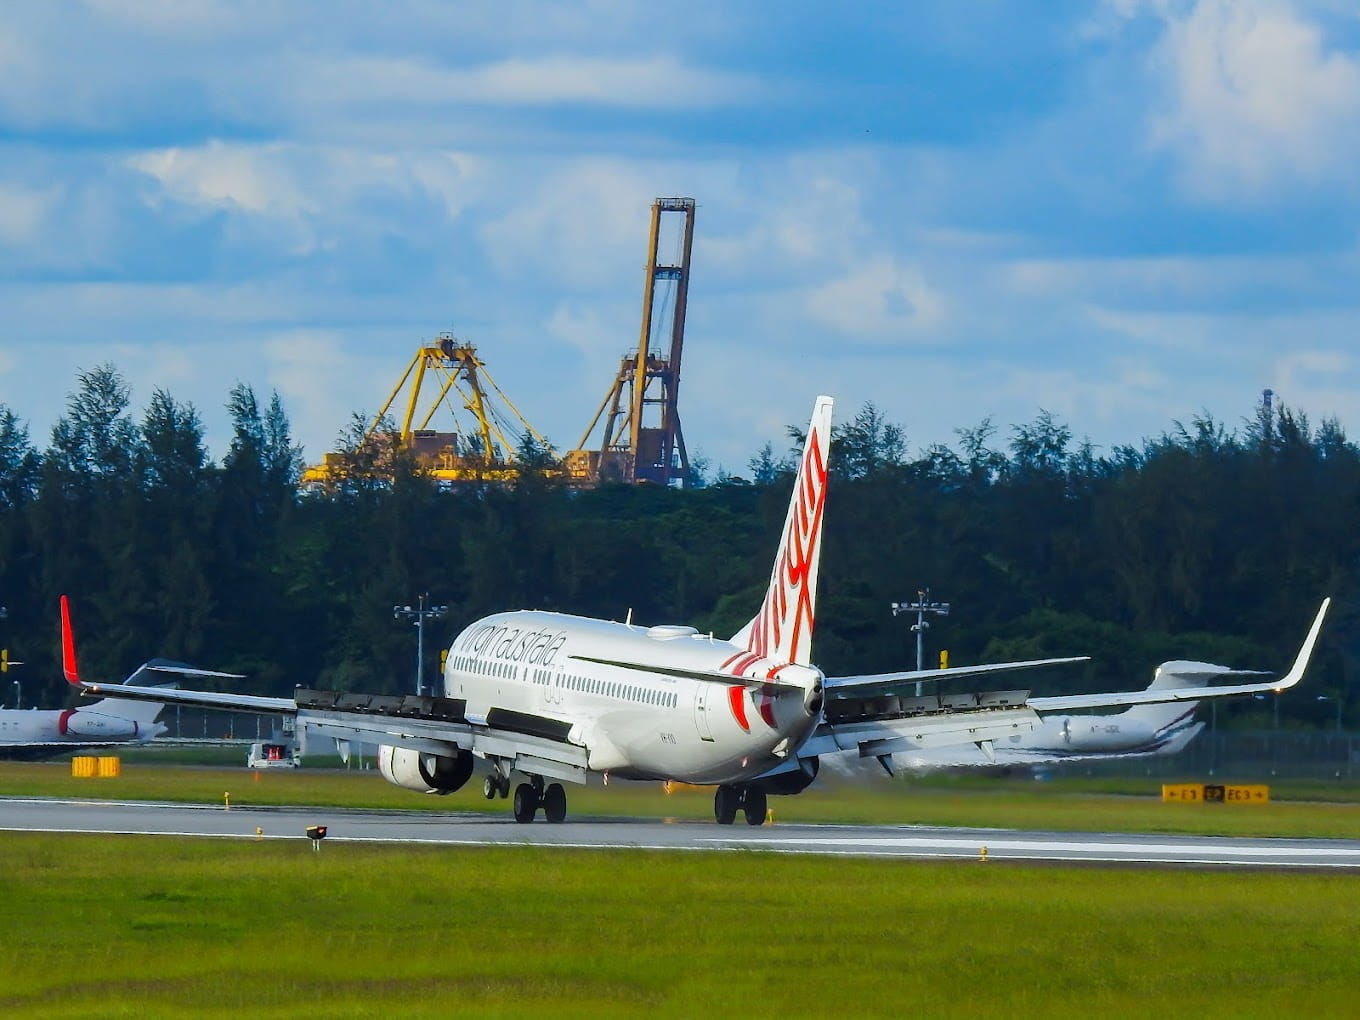 a virgin australia plane on seletar airport's runway